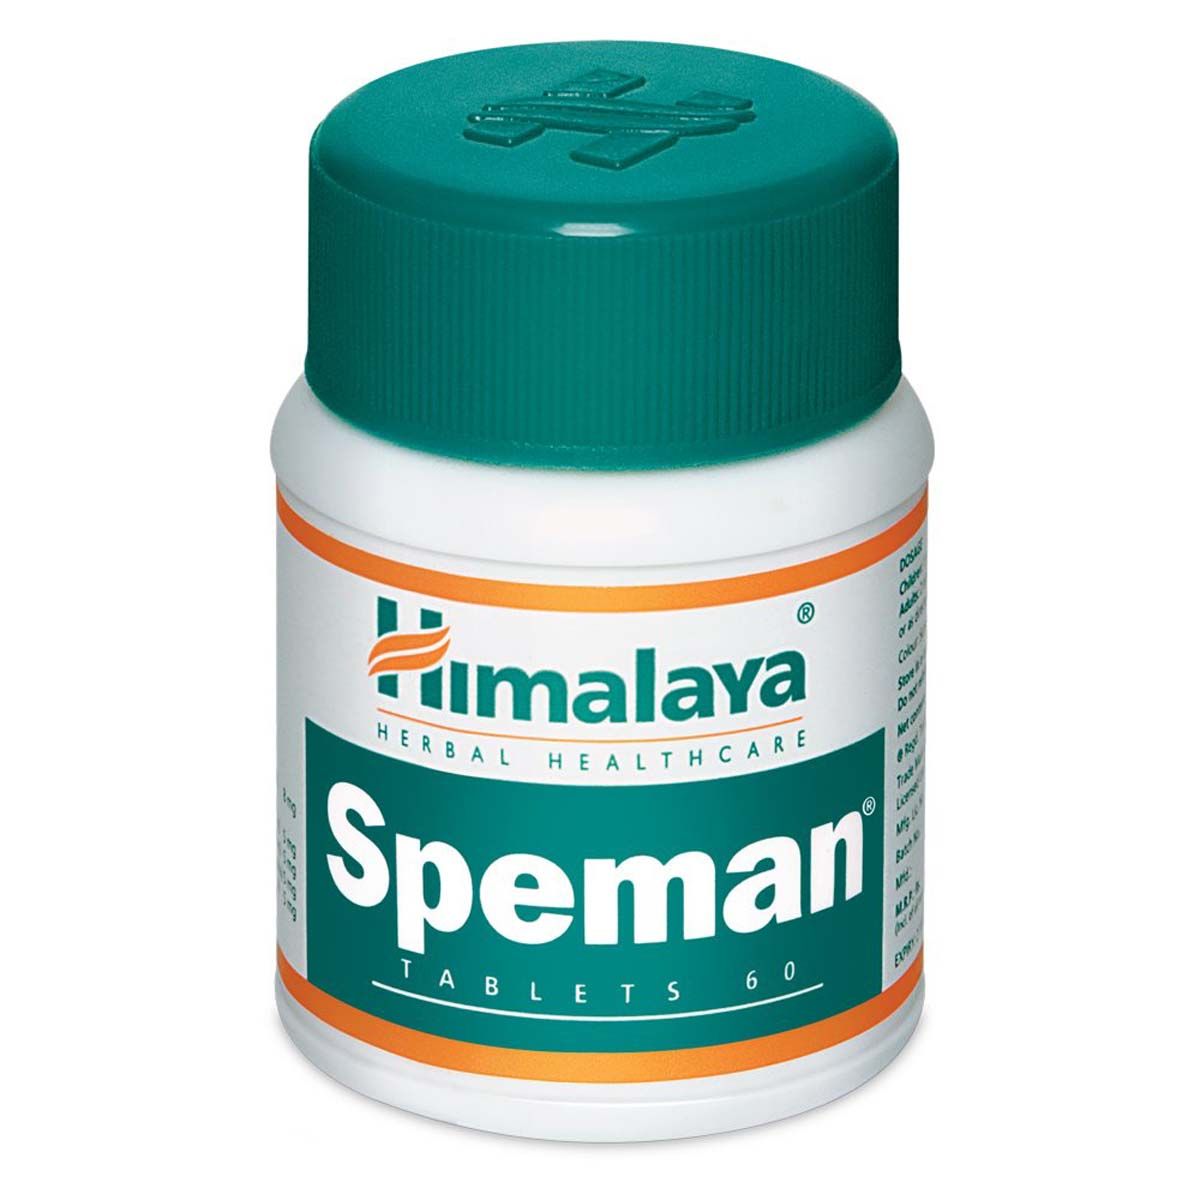 Himalaya Speman, 60 Tablets, Pack of 1 